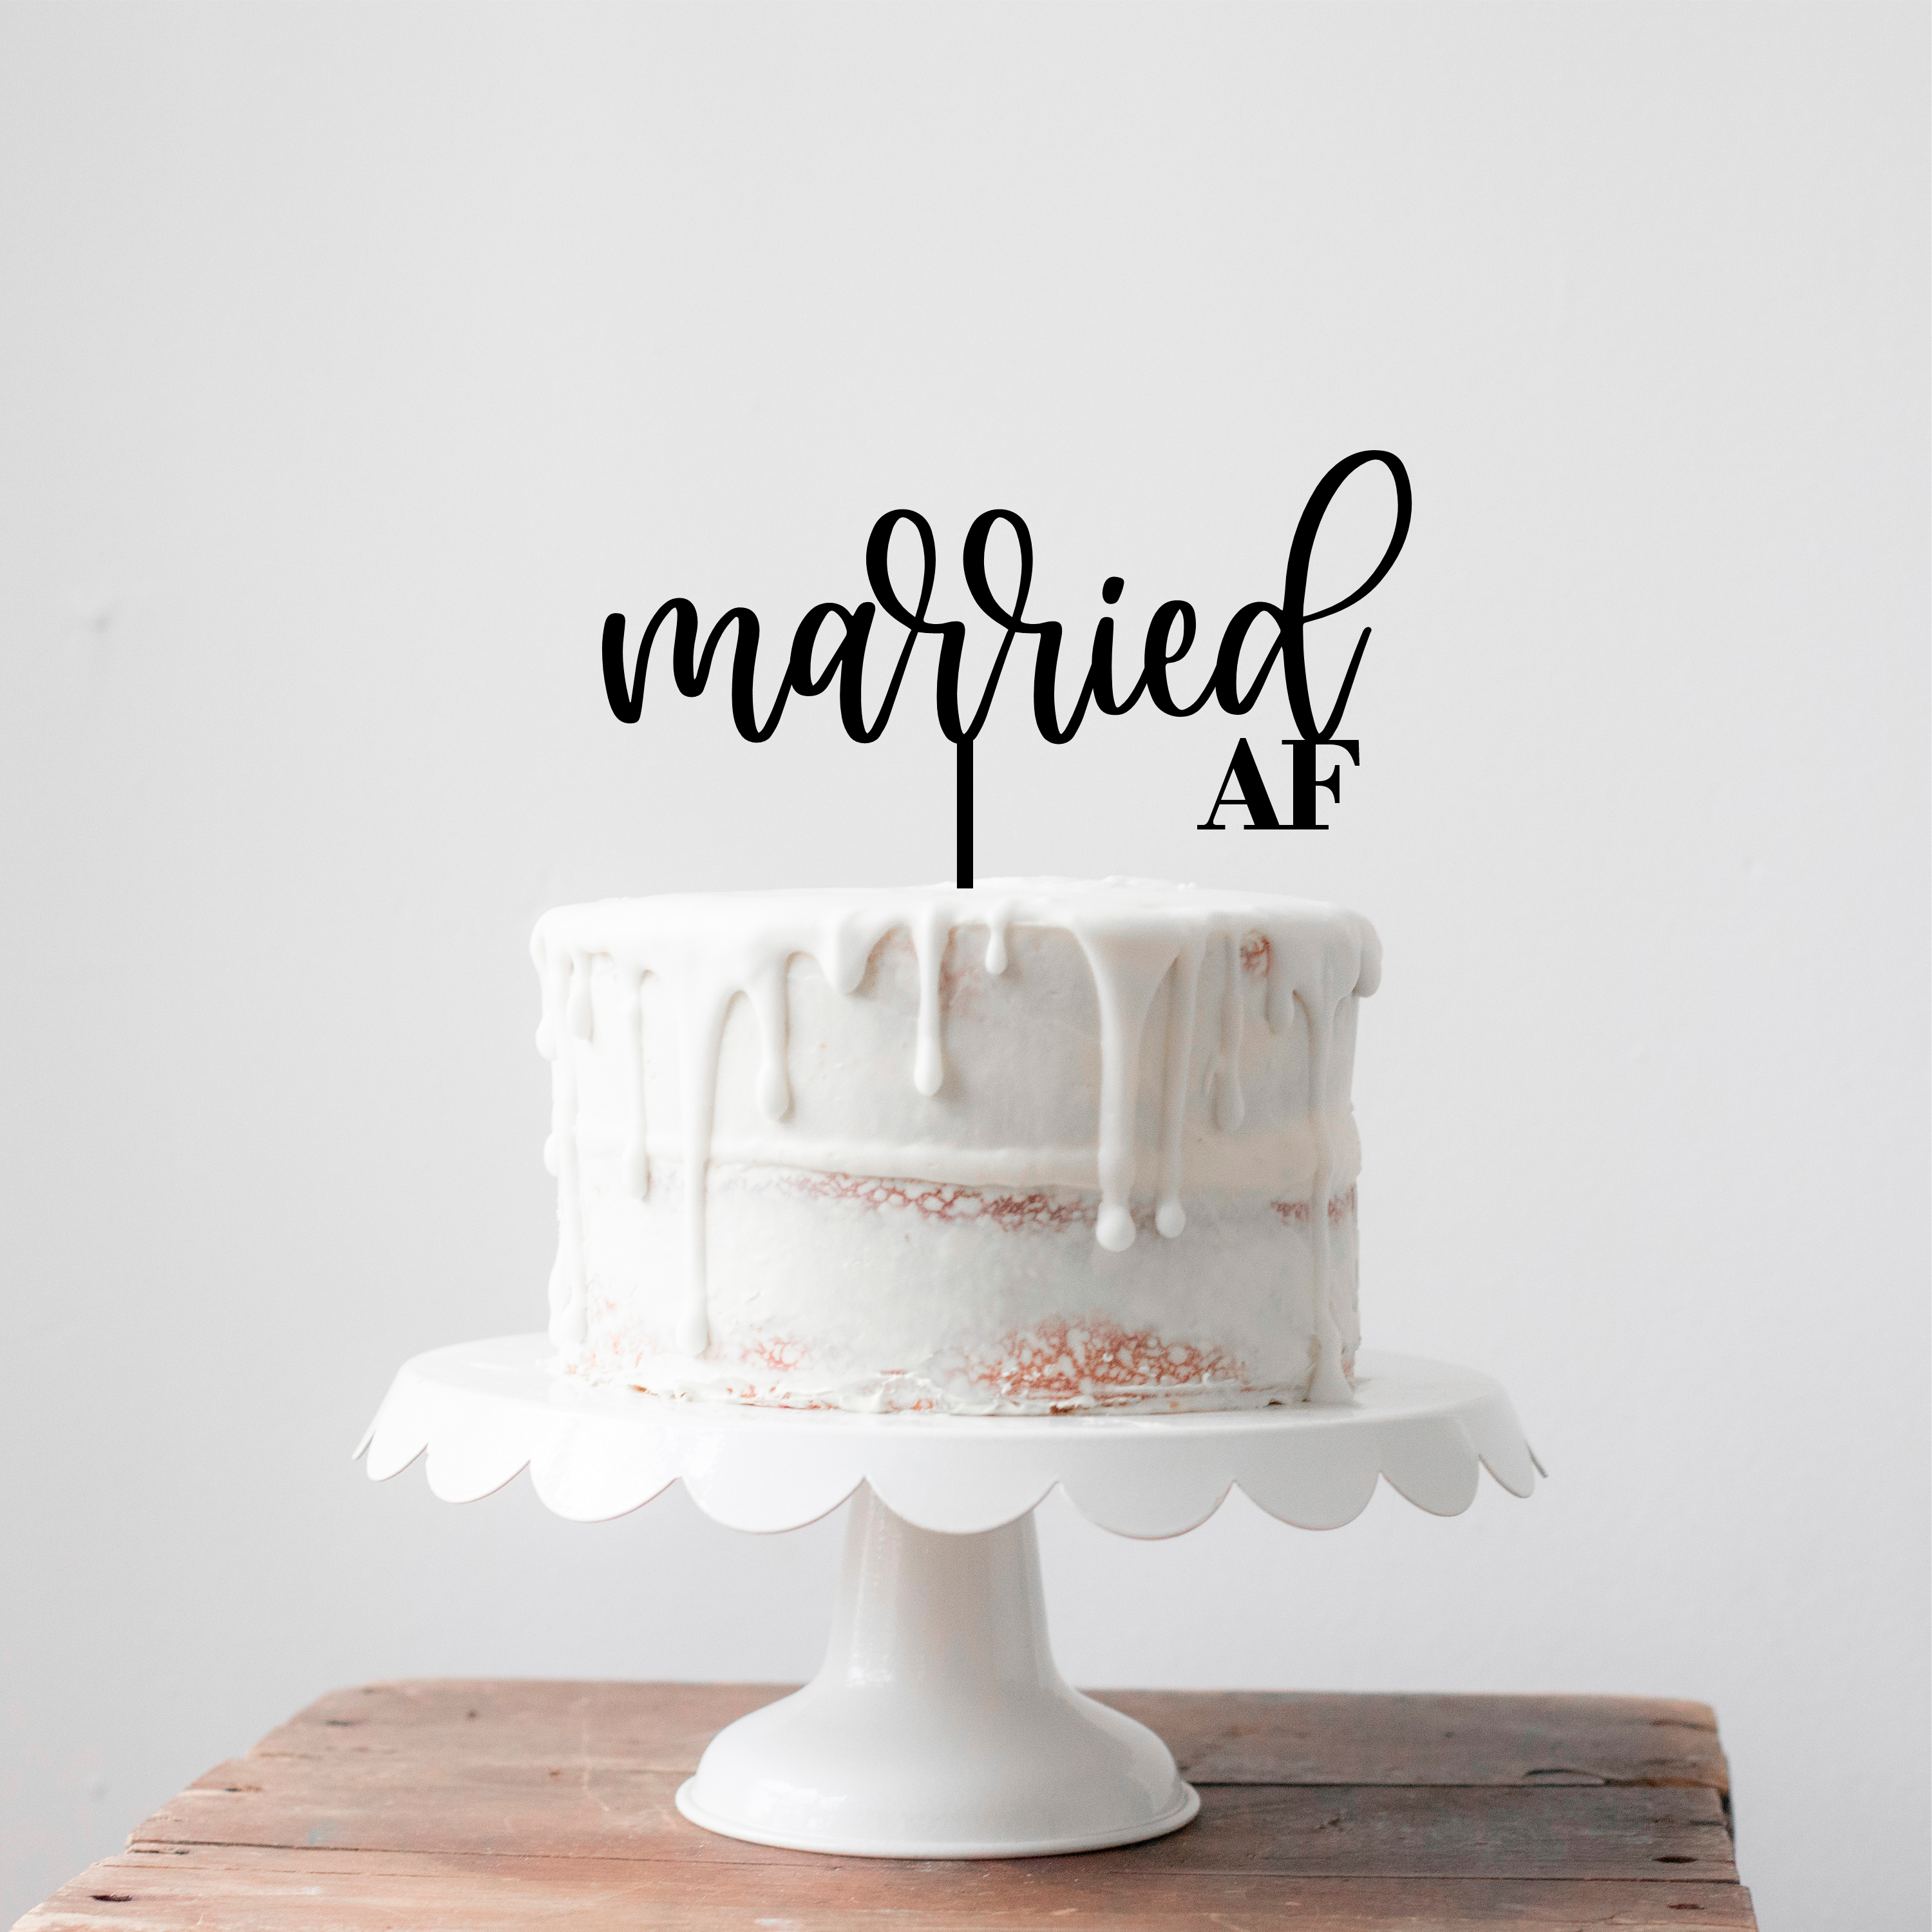 Married AF Cake Topper - Wood (MDF) or Acrylic - Wood Cake Topper - Acrylic Cake Topper - Wedding - Cake - Topper -